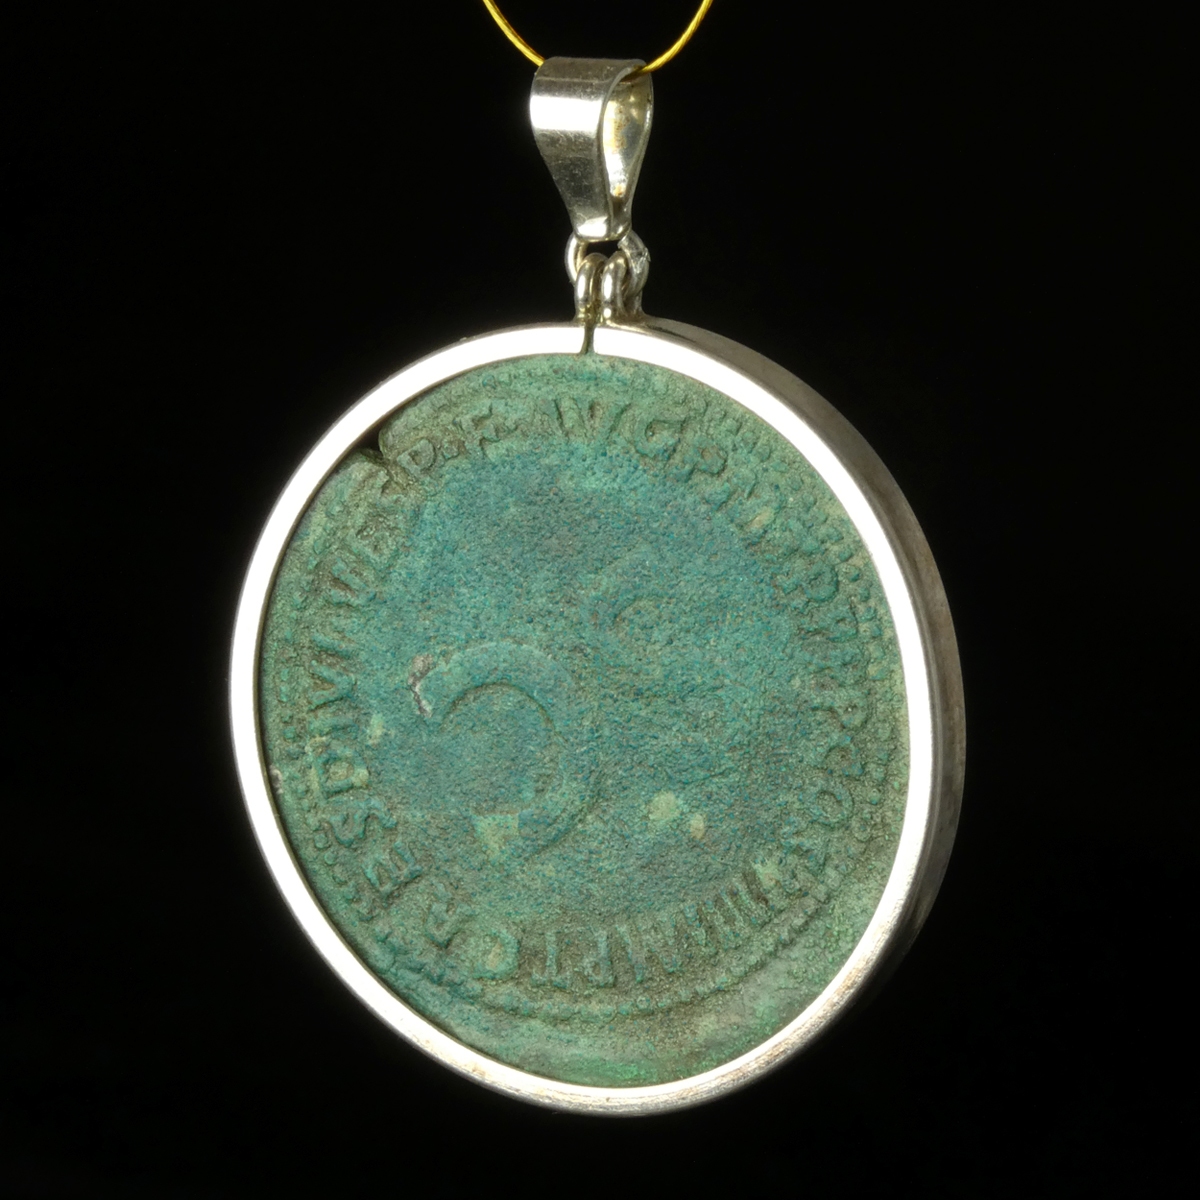 Silver pendant with Roman coin of Vespasian